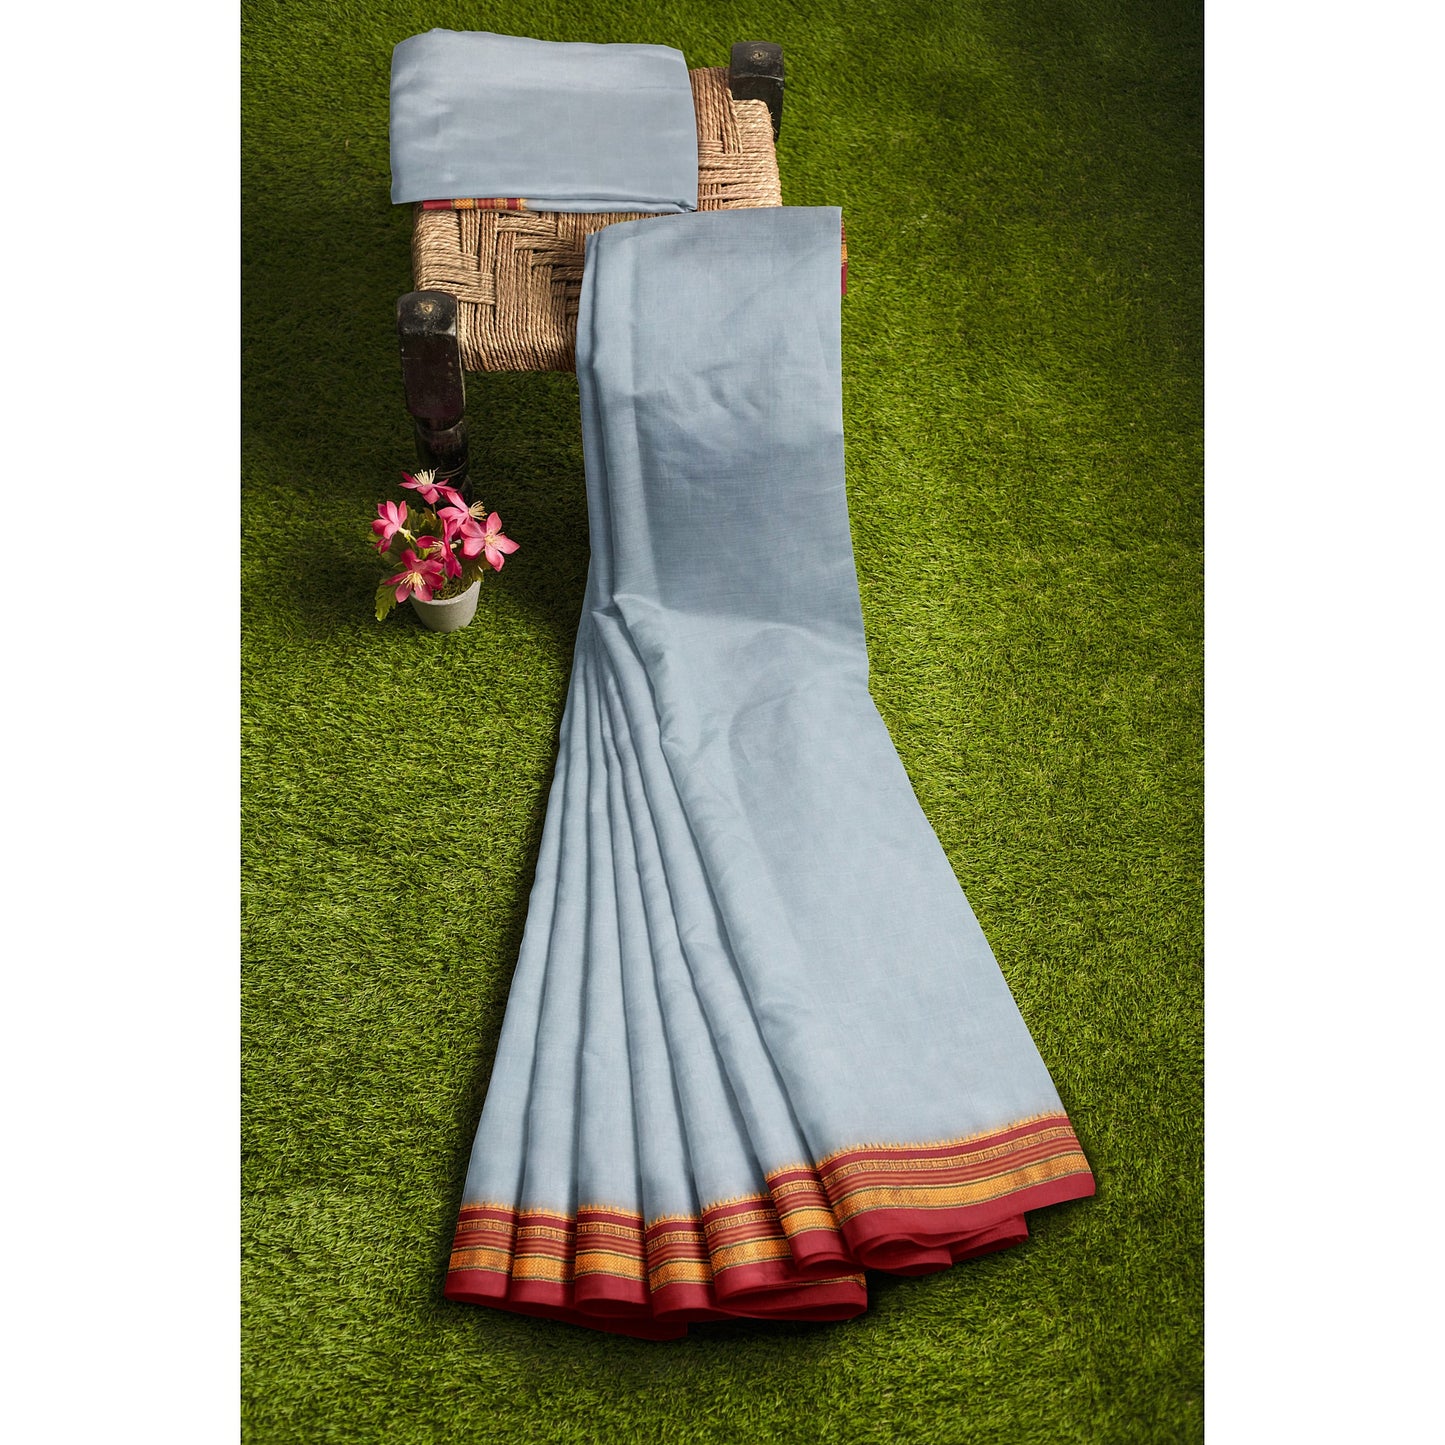 Ambuja Soft Mercerized Cotton saree - Light Blue with Red border